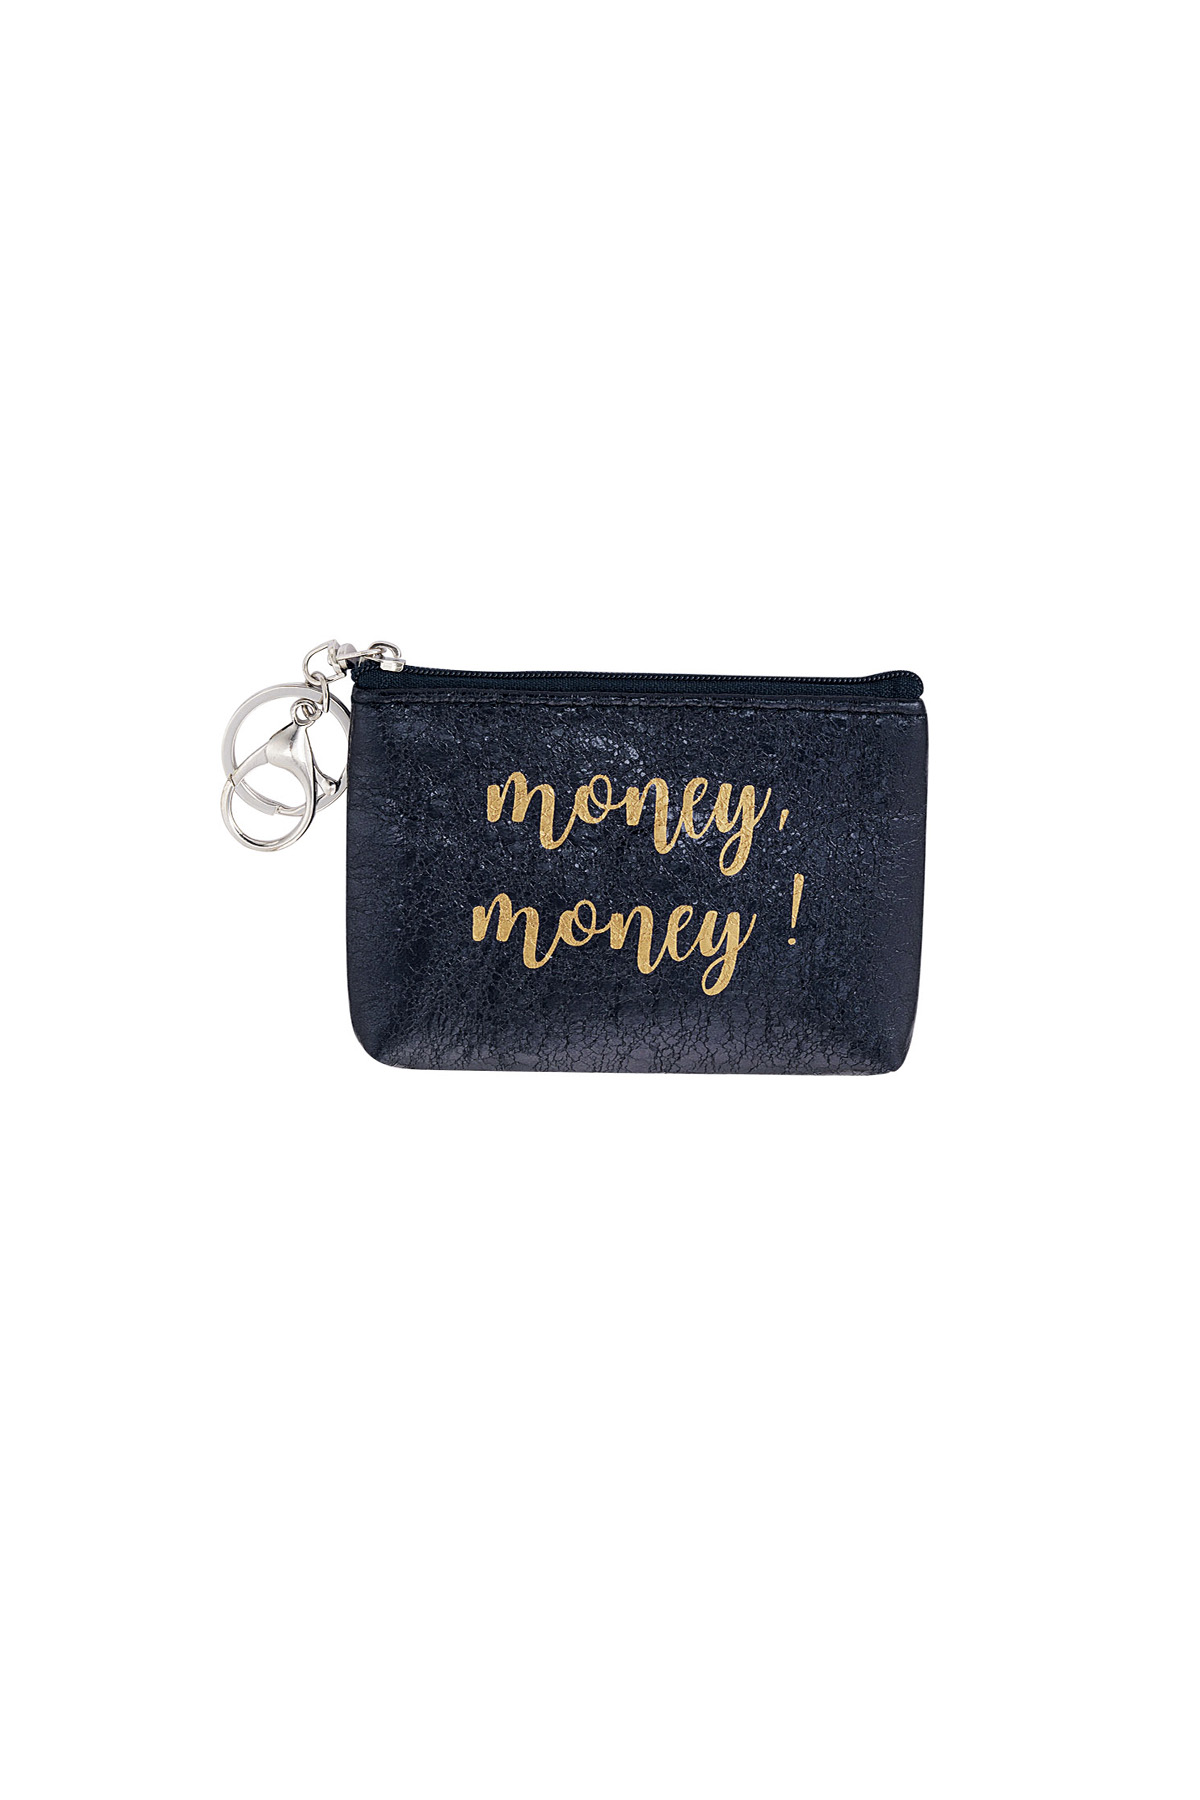 Keychain wallet metallic money money - black 